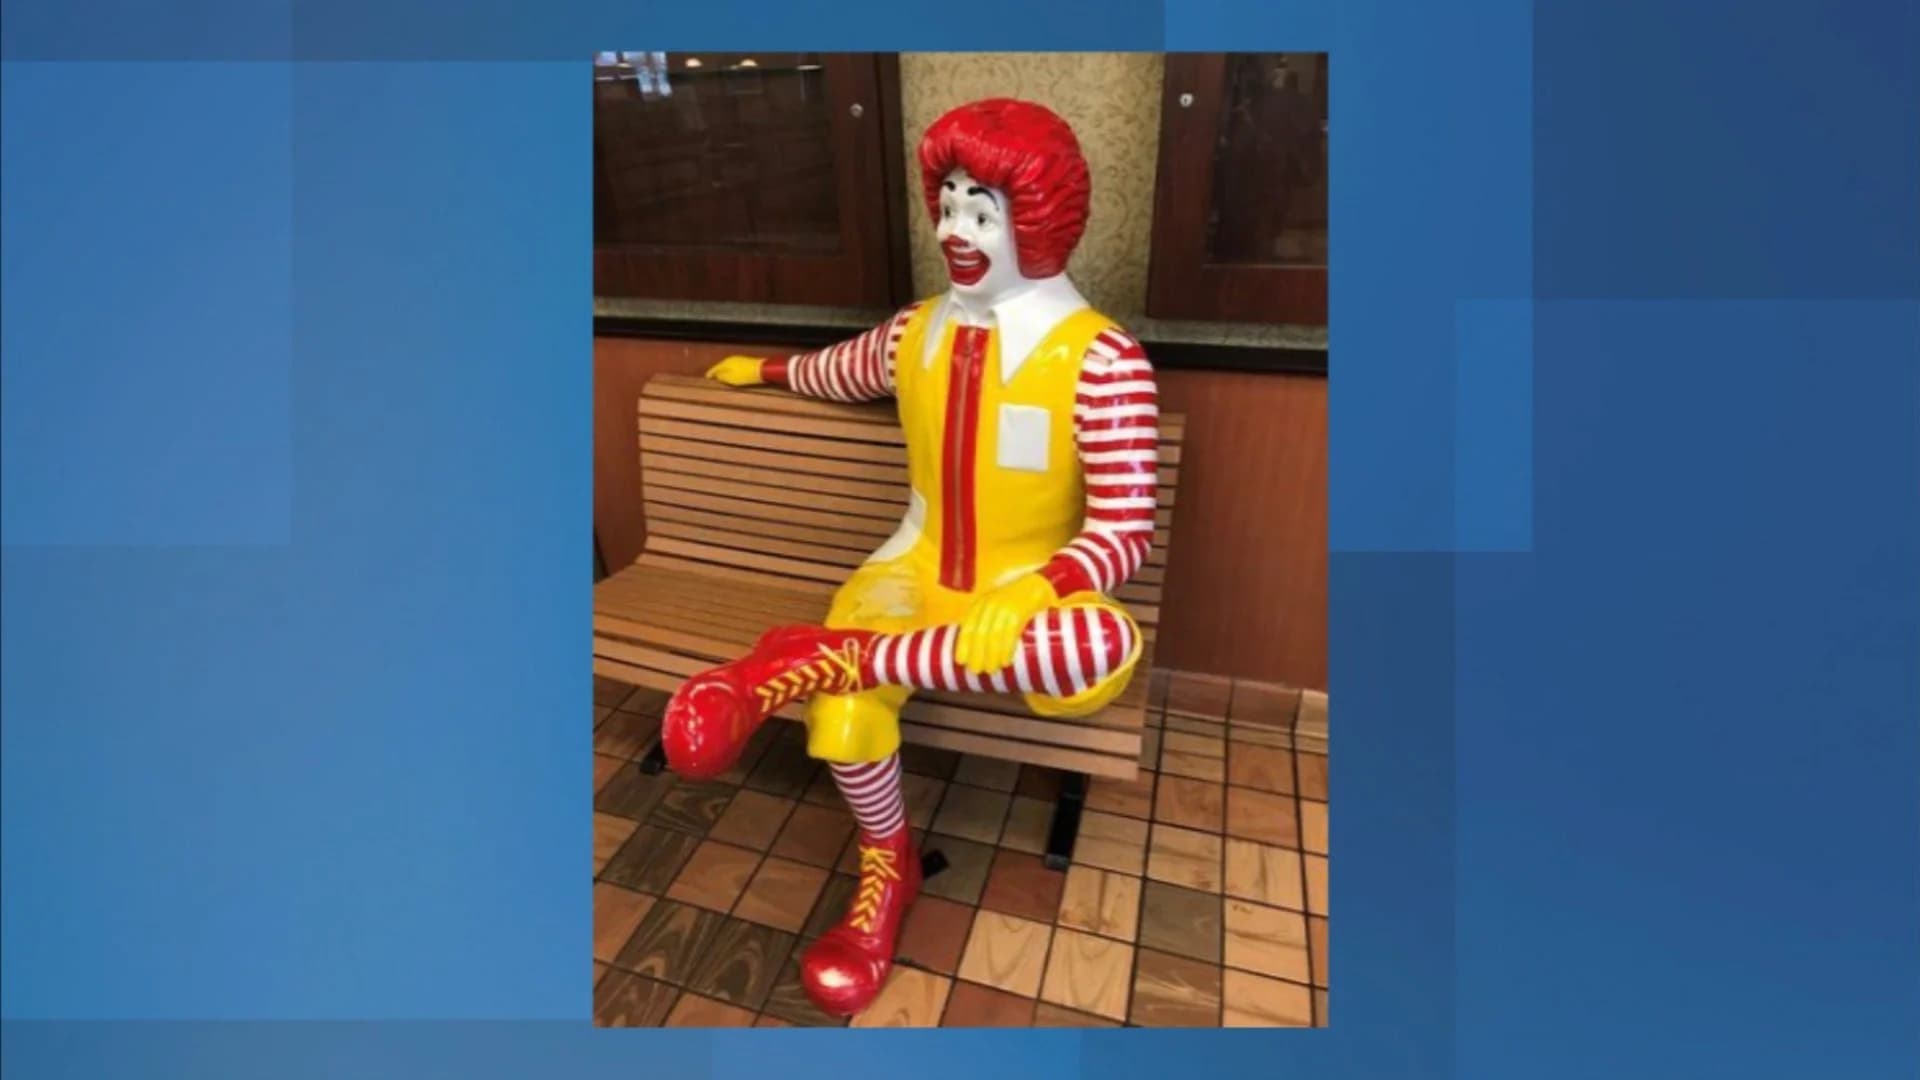 Ronald McDonald statue stolen from Clinton McDonald’s